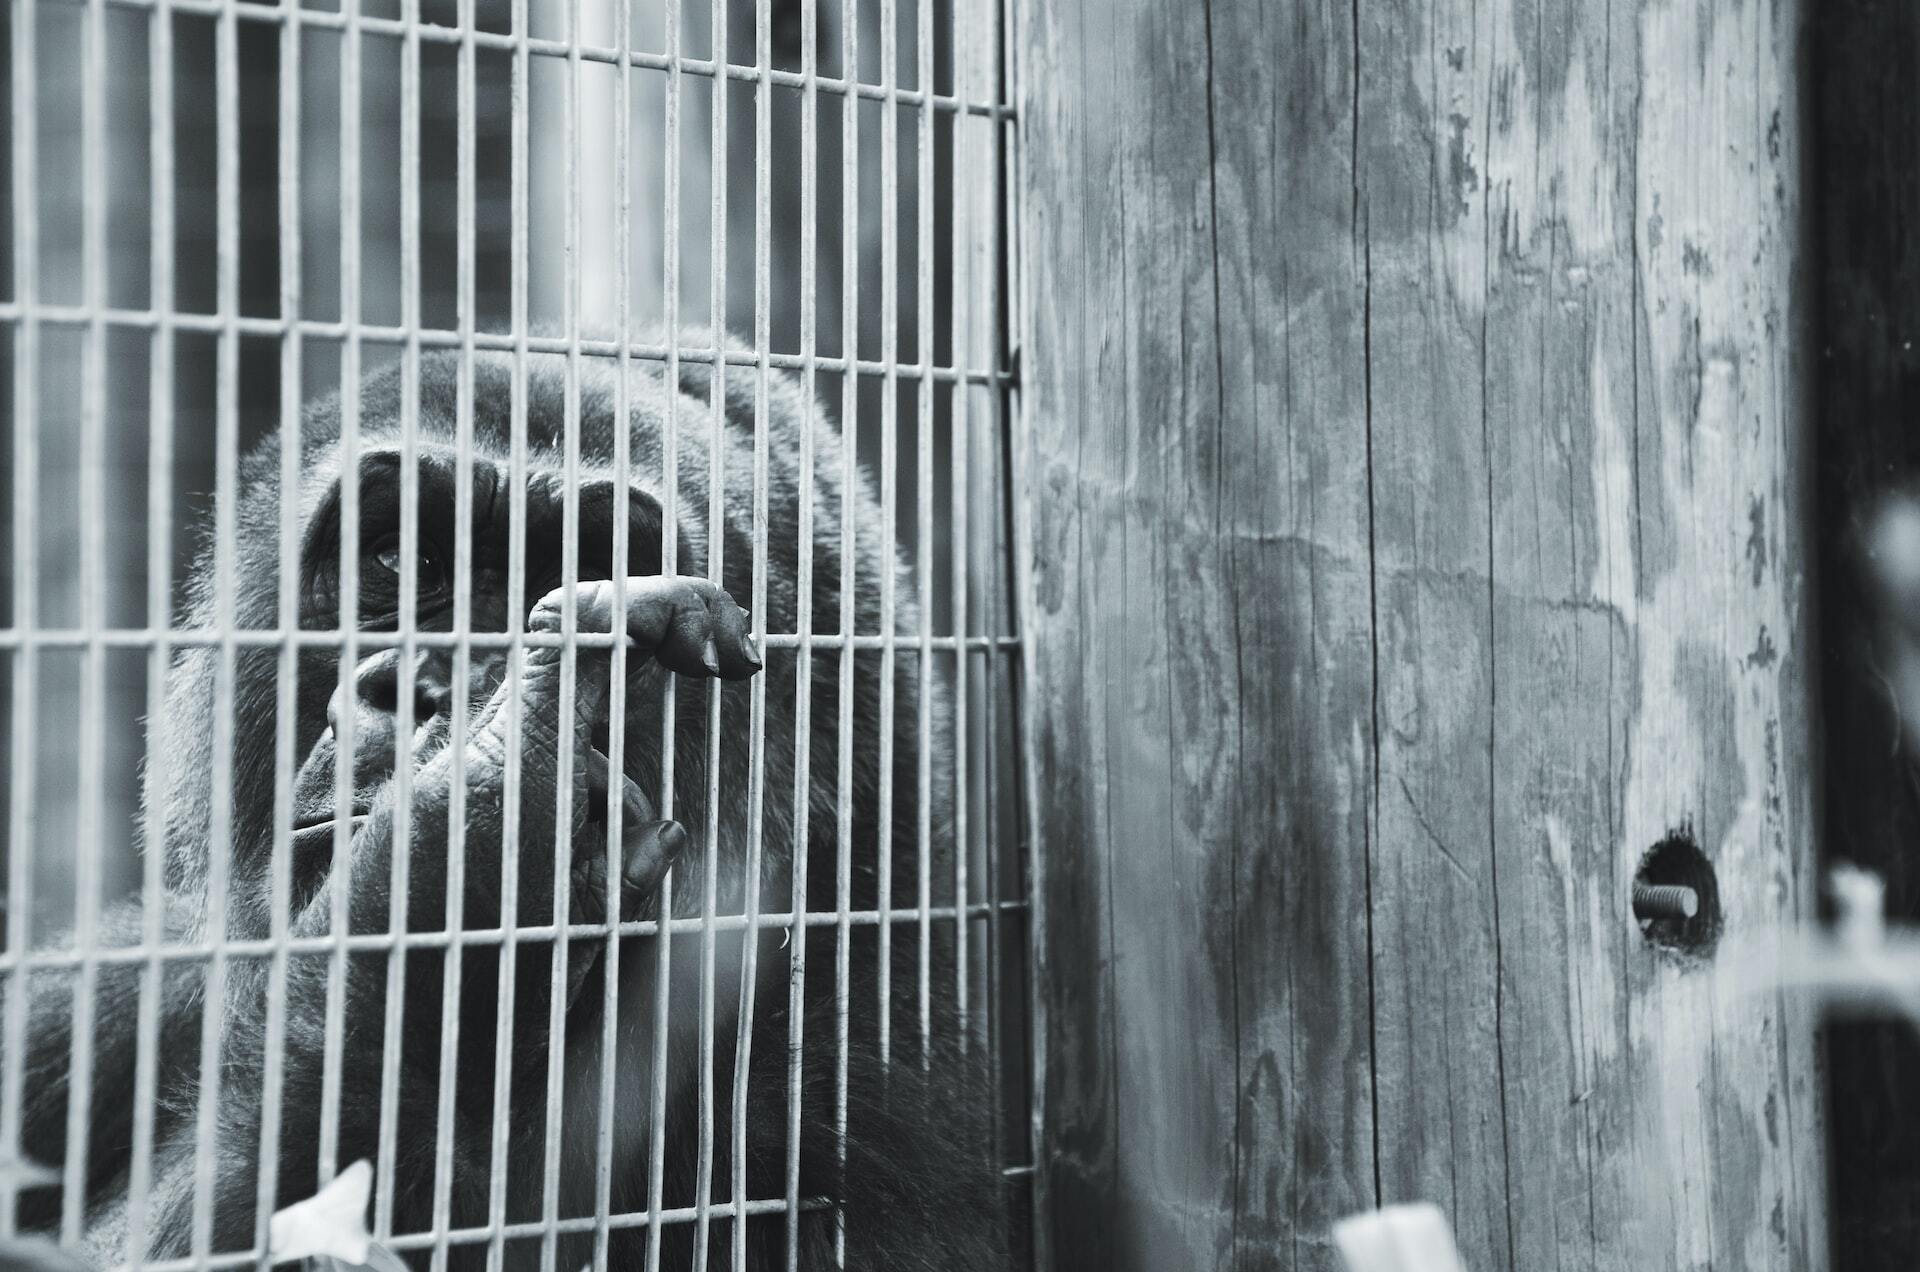 captive gorilla in cage